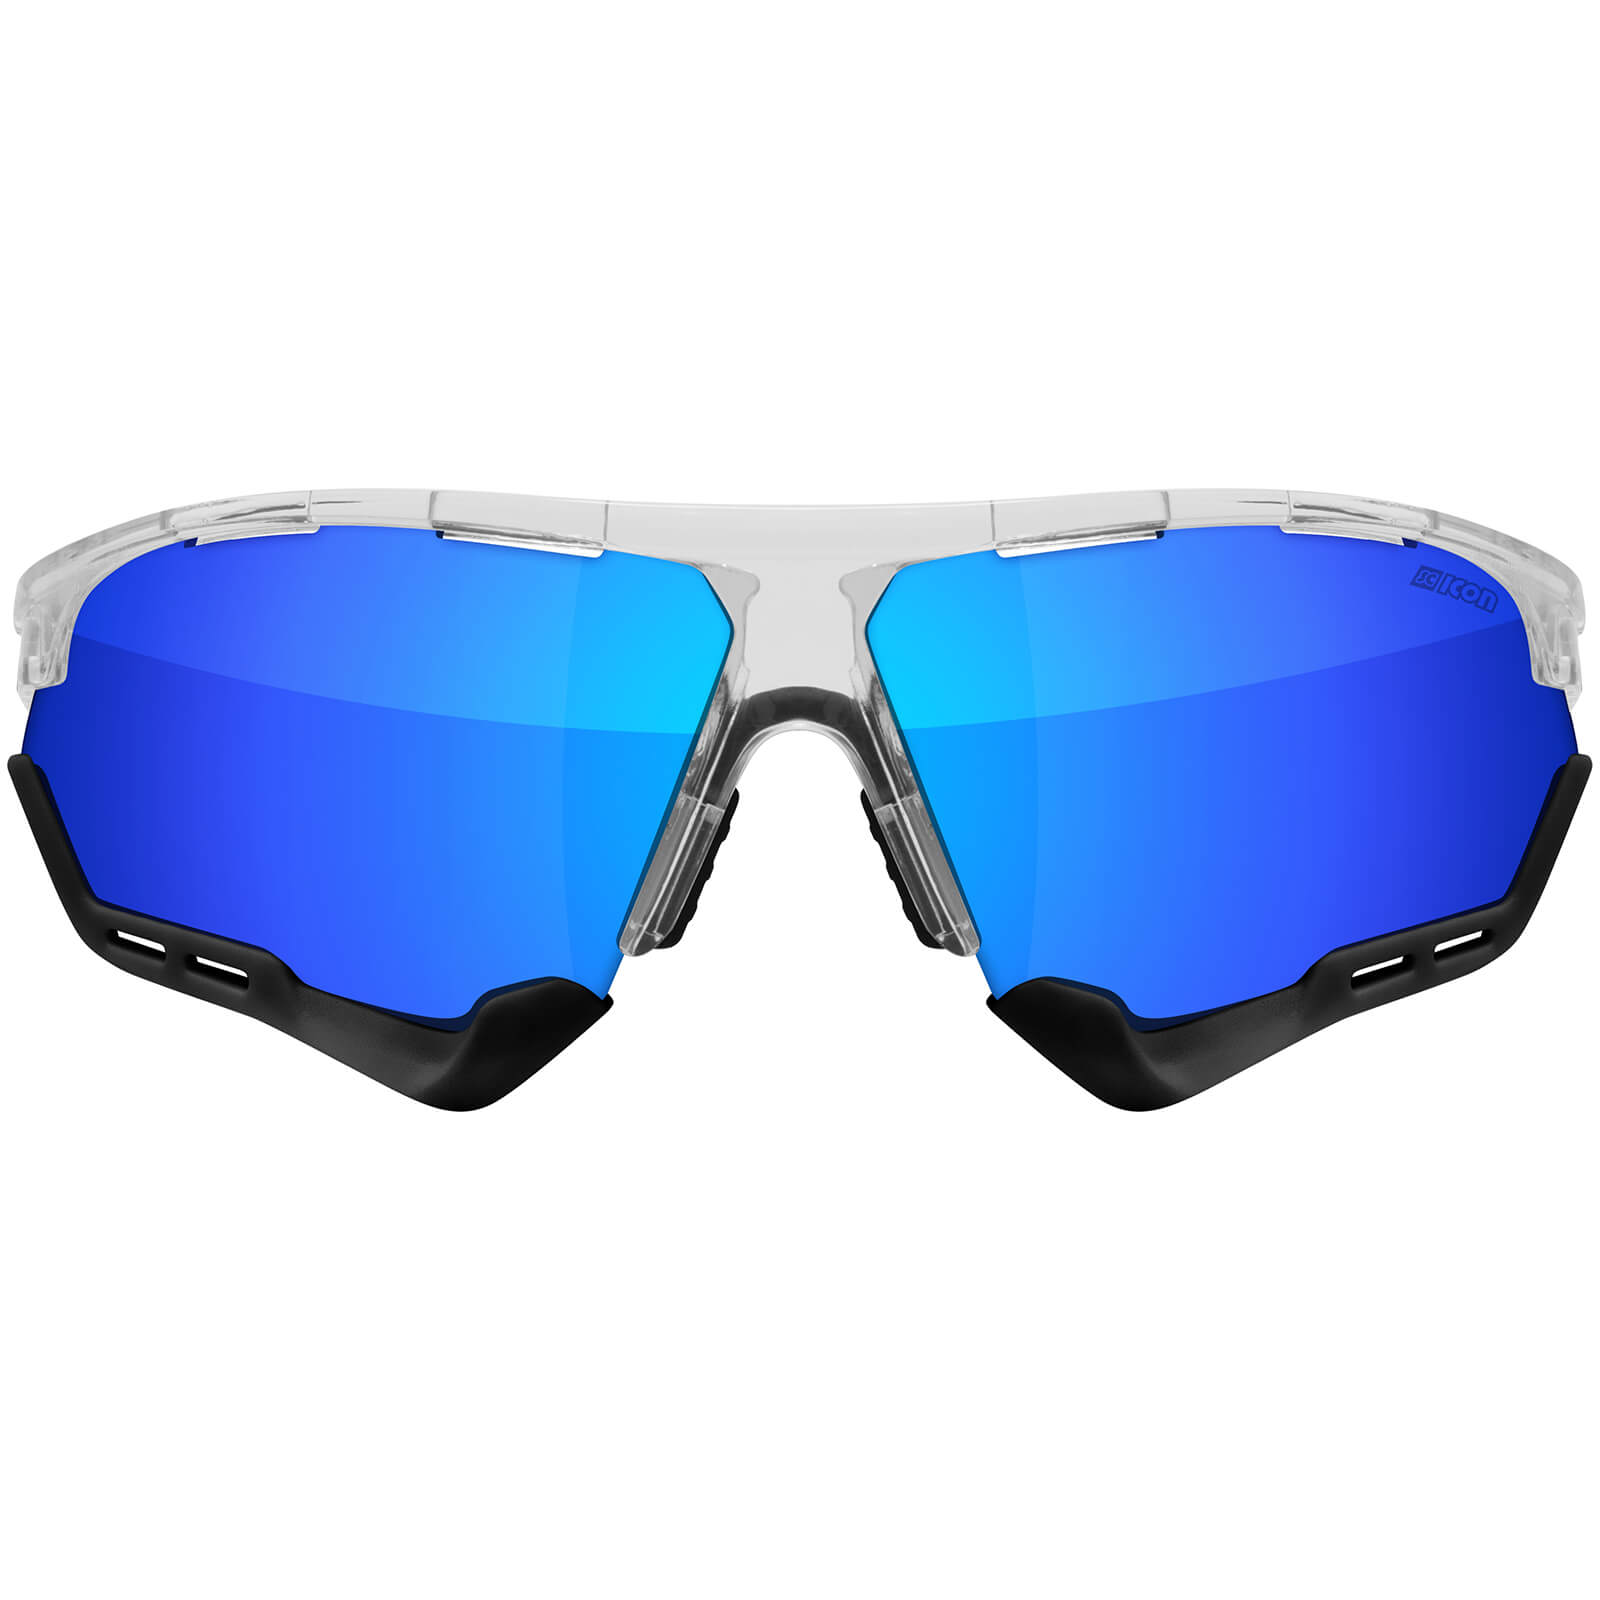 Scicon Aerocomfort Xl Road Sunglasses - Crystal Gloss - Multilaser Blue